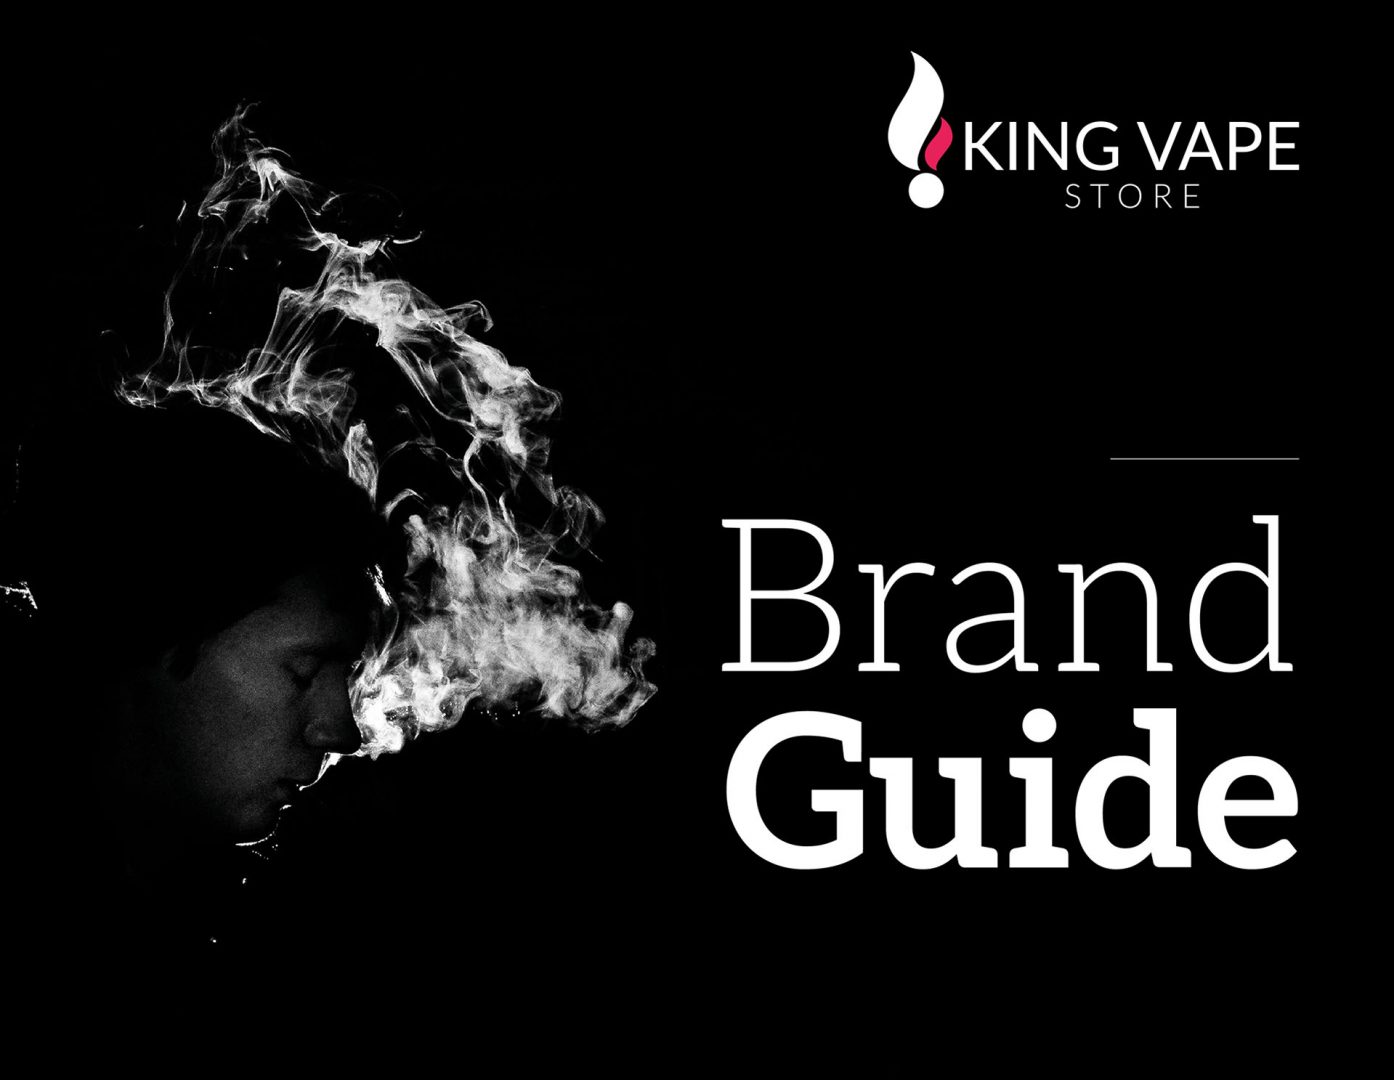 King Vape Store - King Vape Brand Guide 02 - Zera Creative